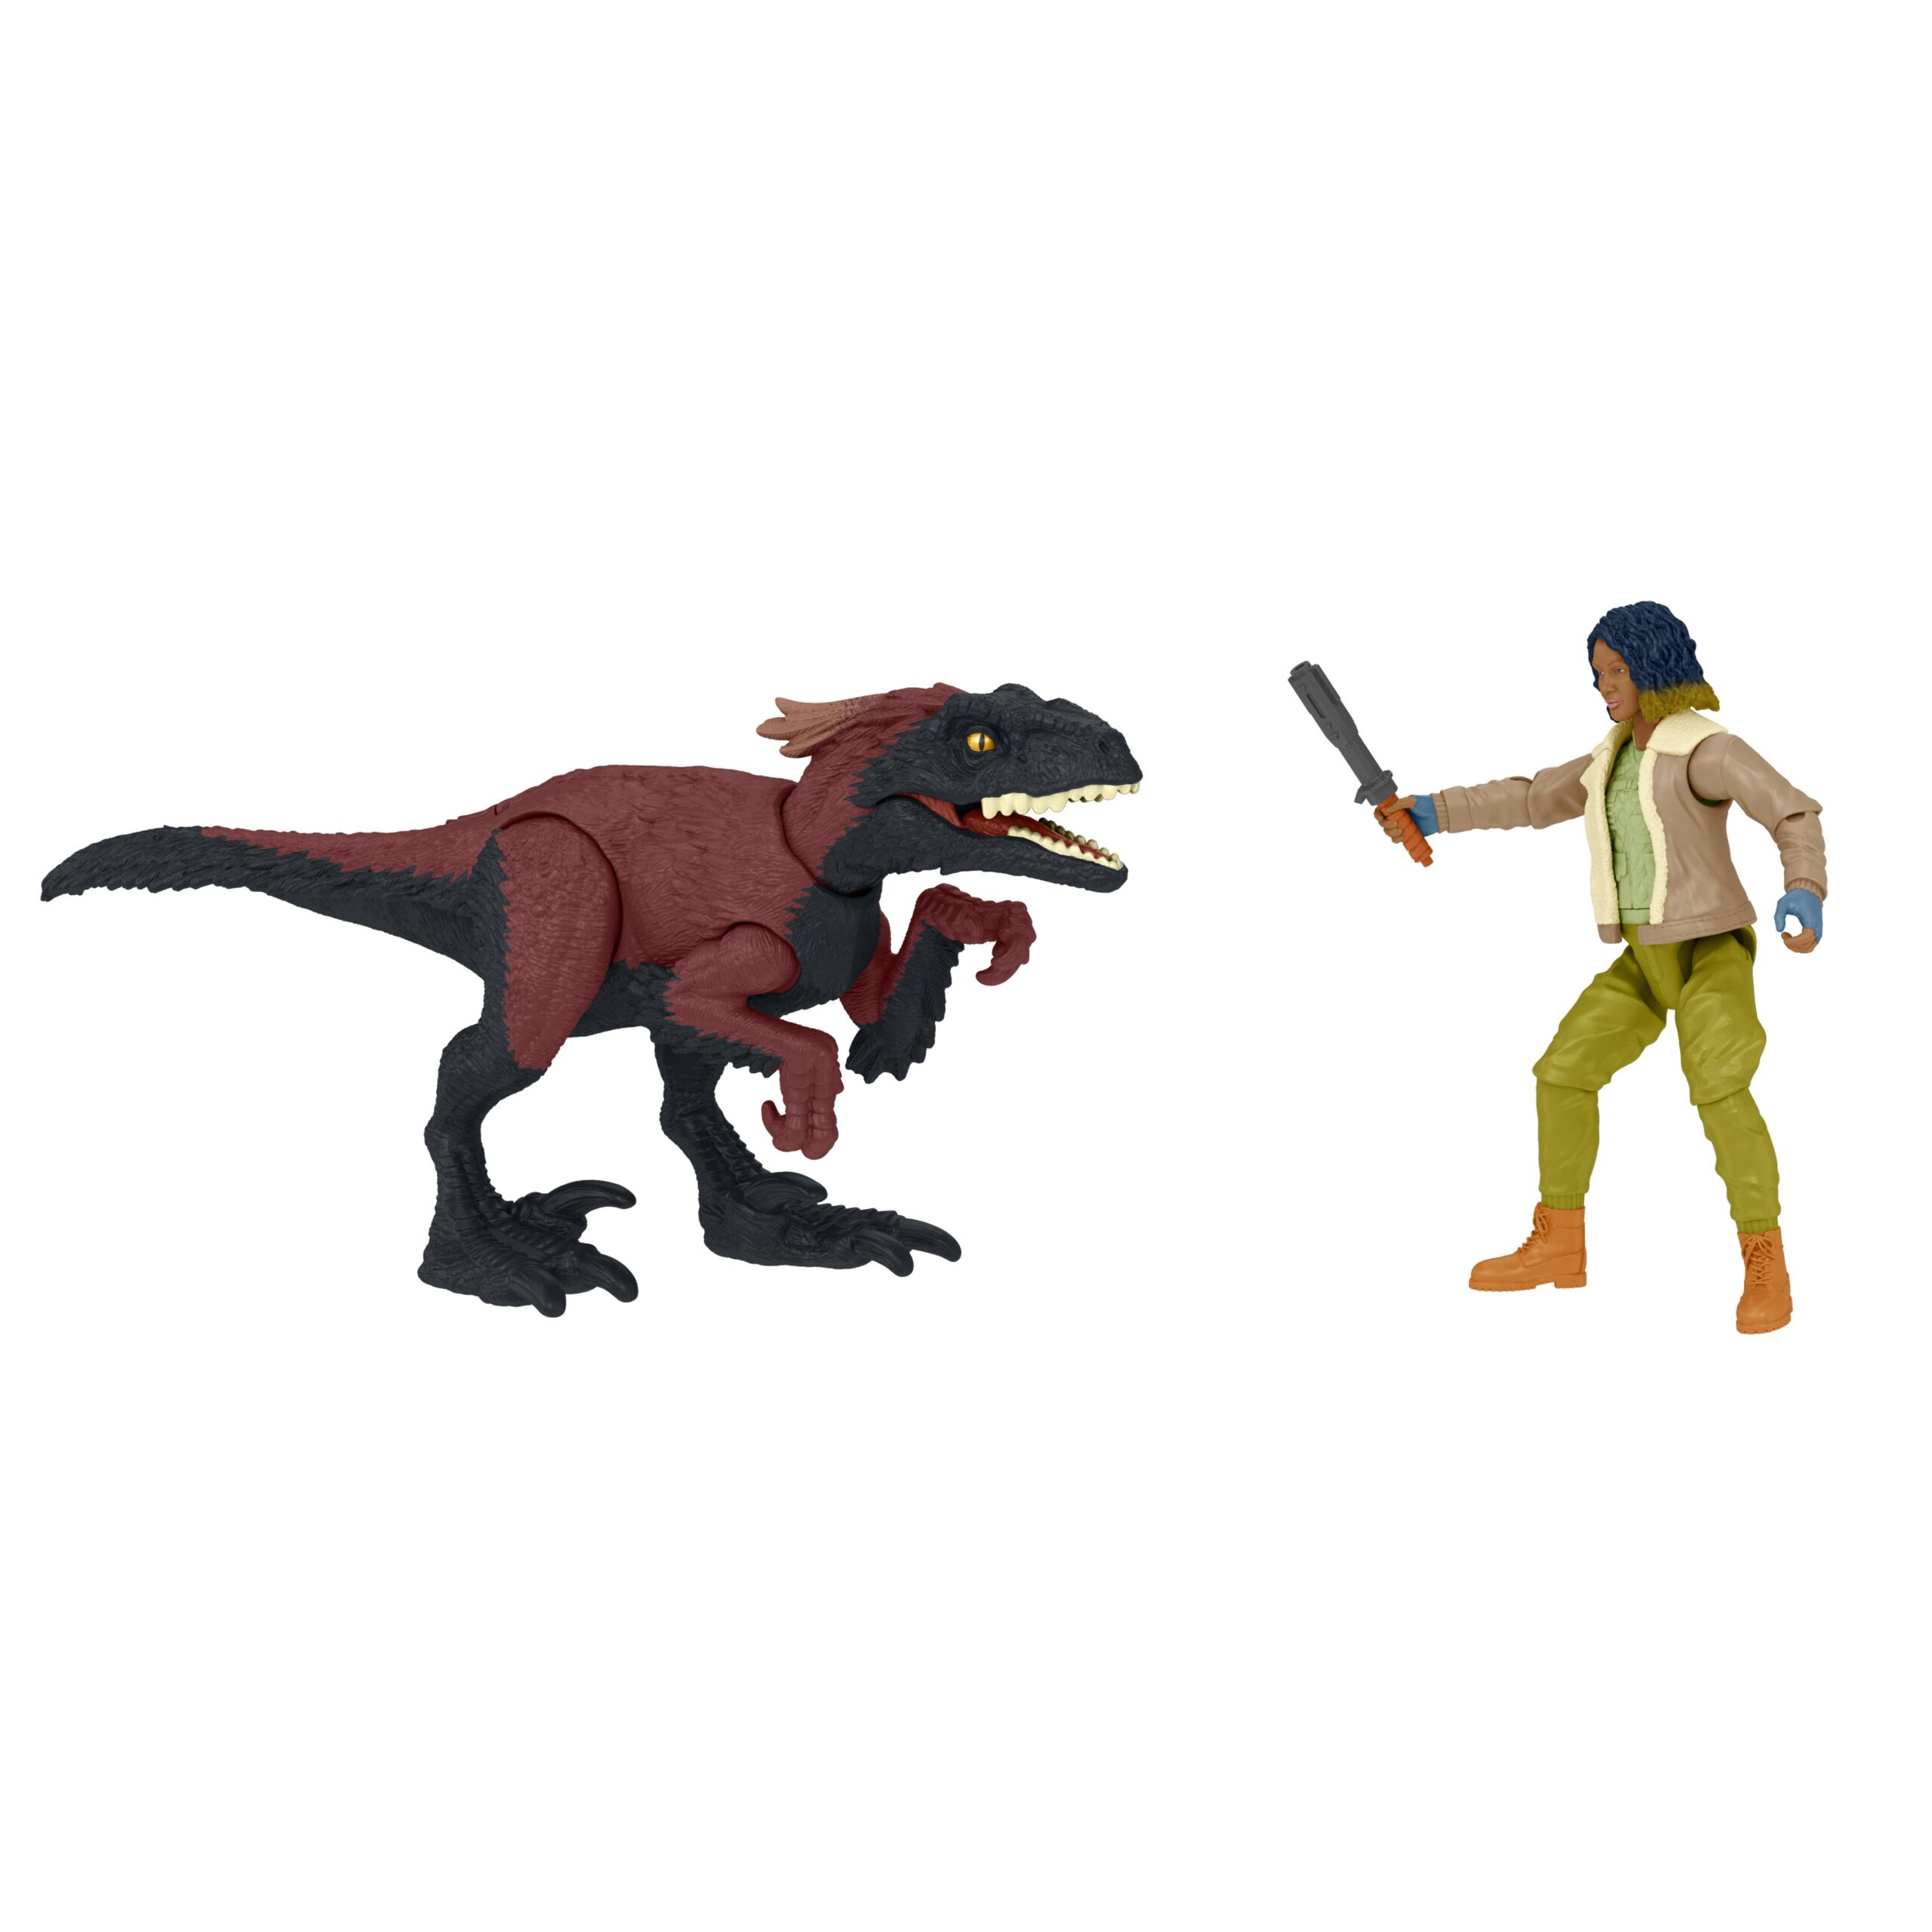 Jurassic World Σετ Άνθρωπος & Δεινόσαυρος 5 Σχέδια HDX46 - Jurassic World